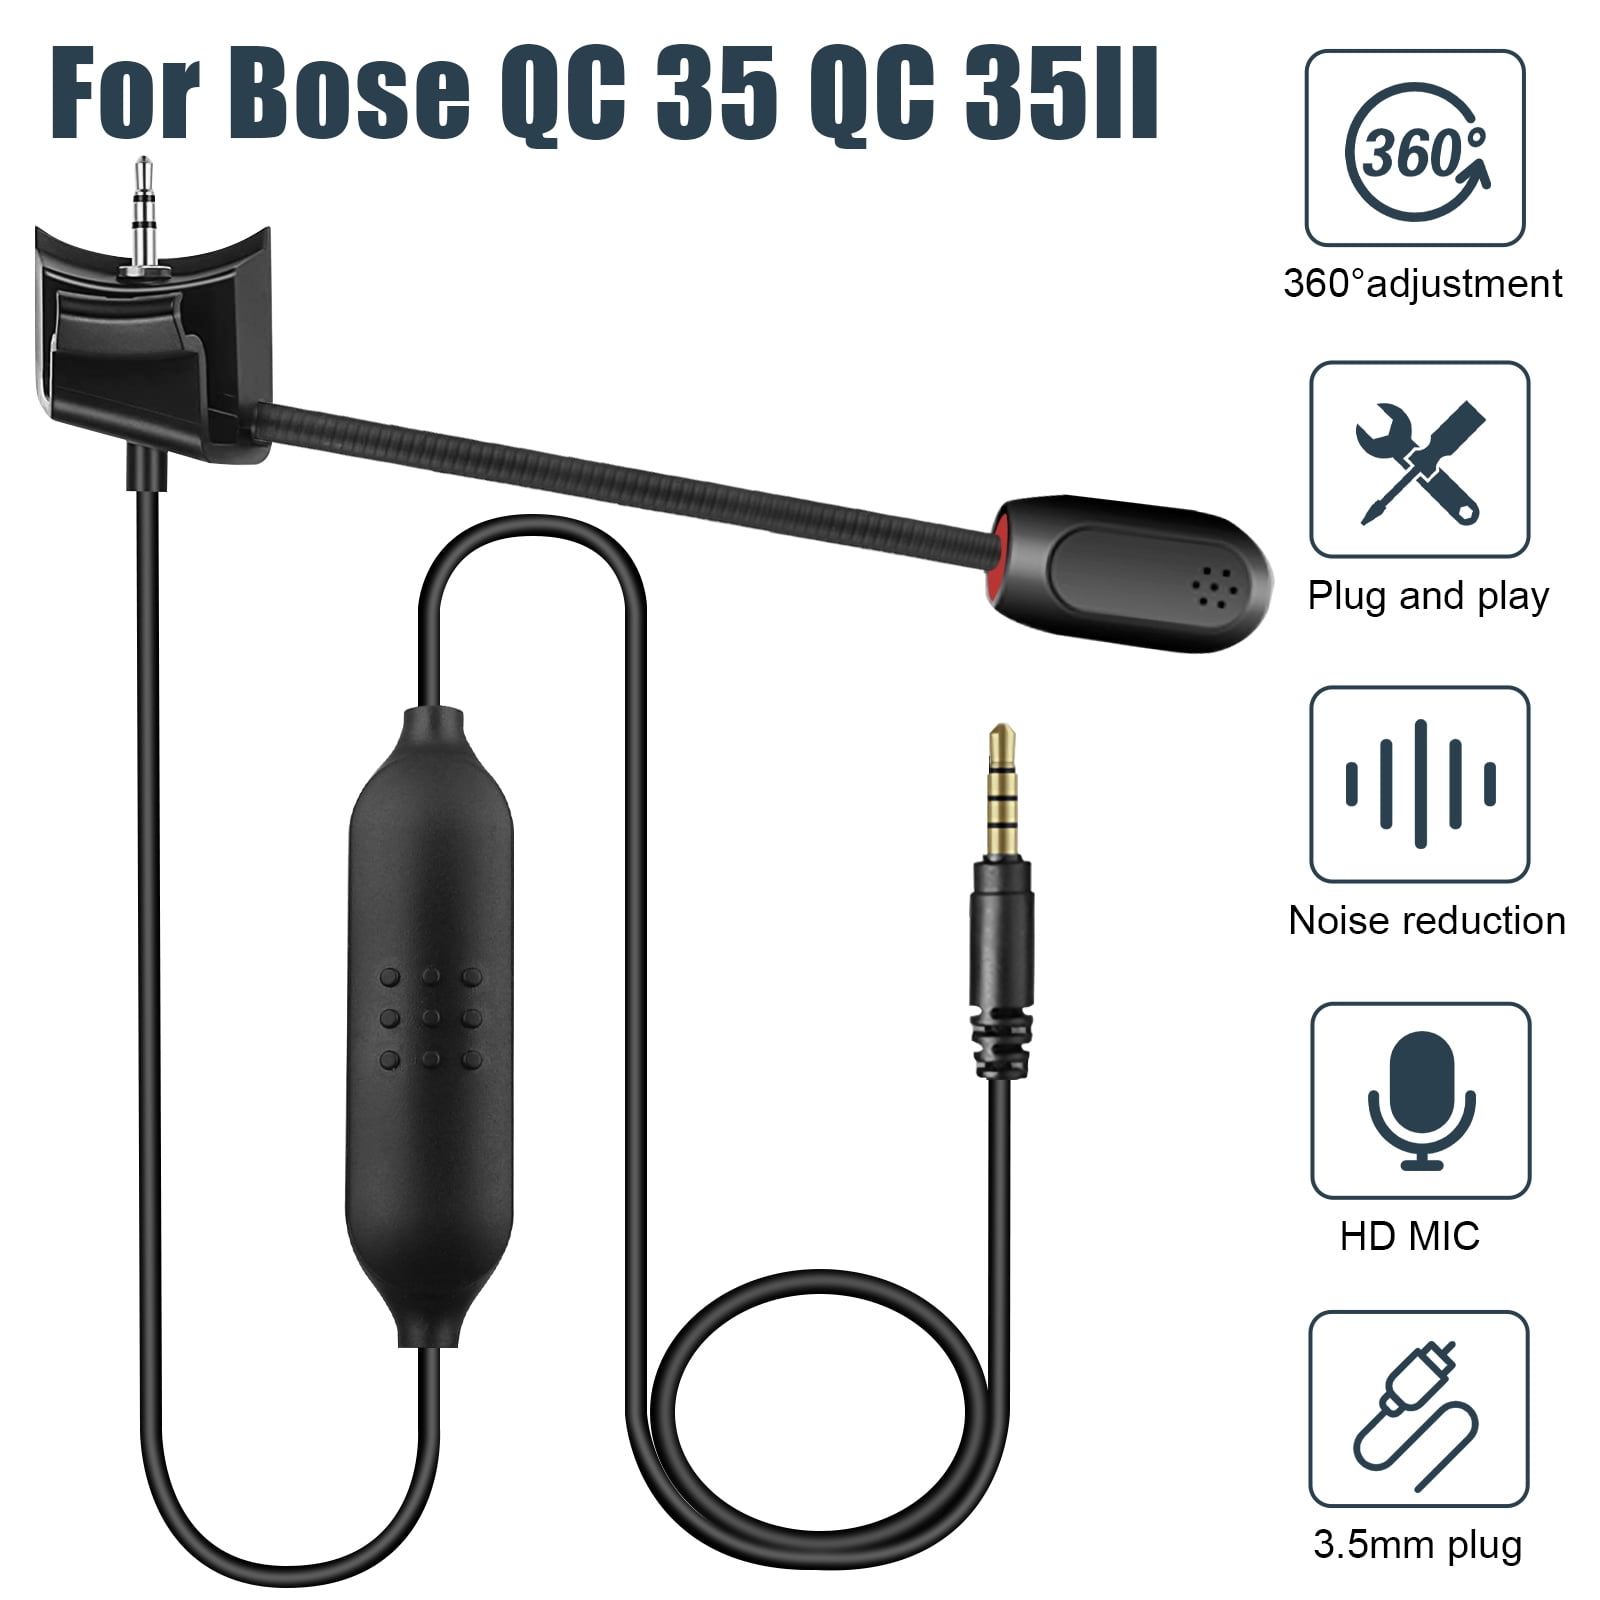 Bose Detachable Boom Cable Microphone for Bose QuietComfort 35 QC35 II Headphones 